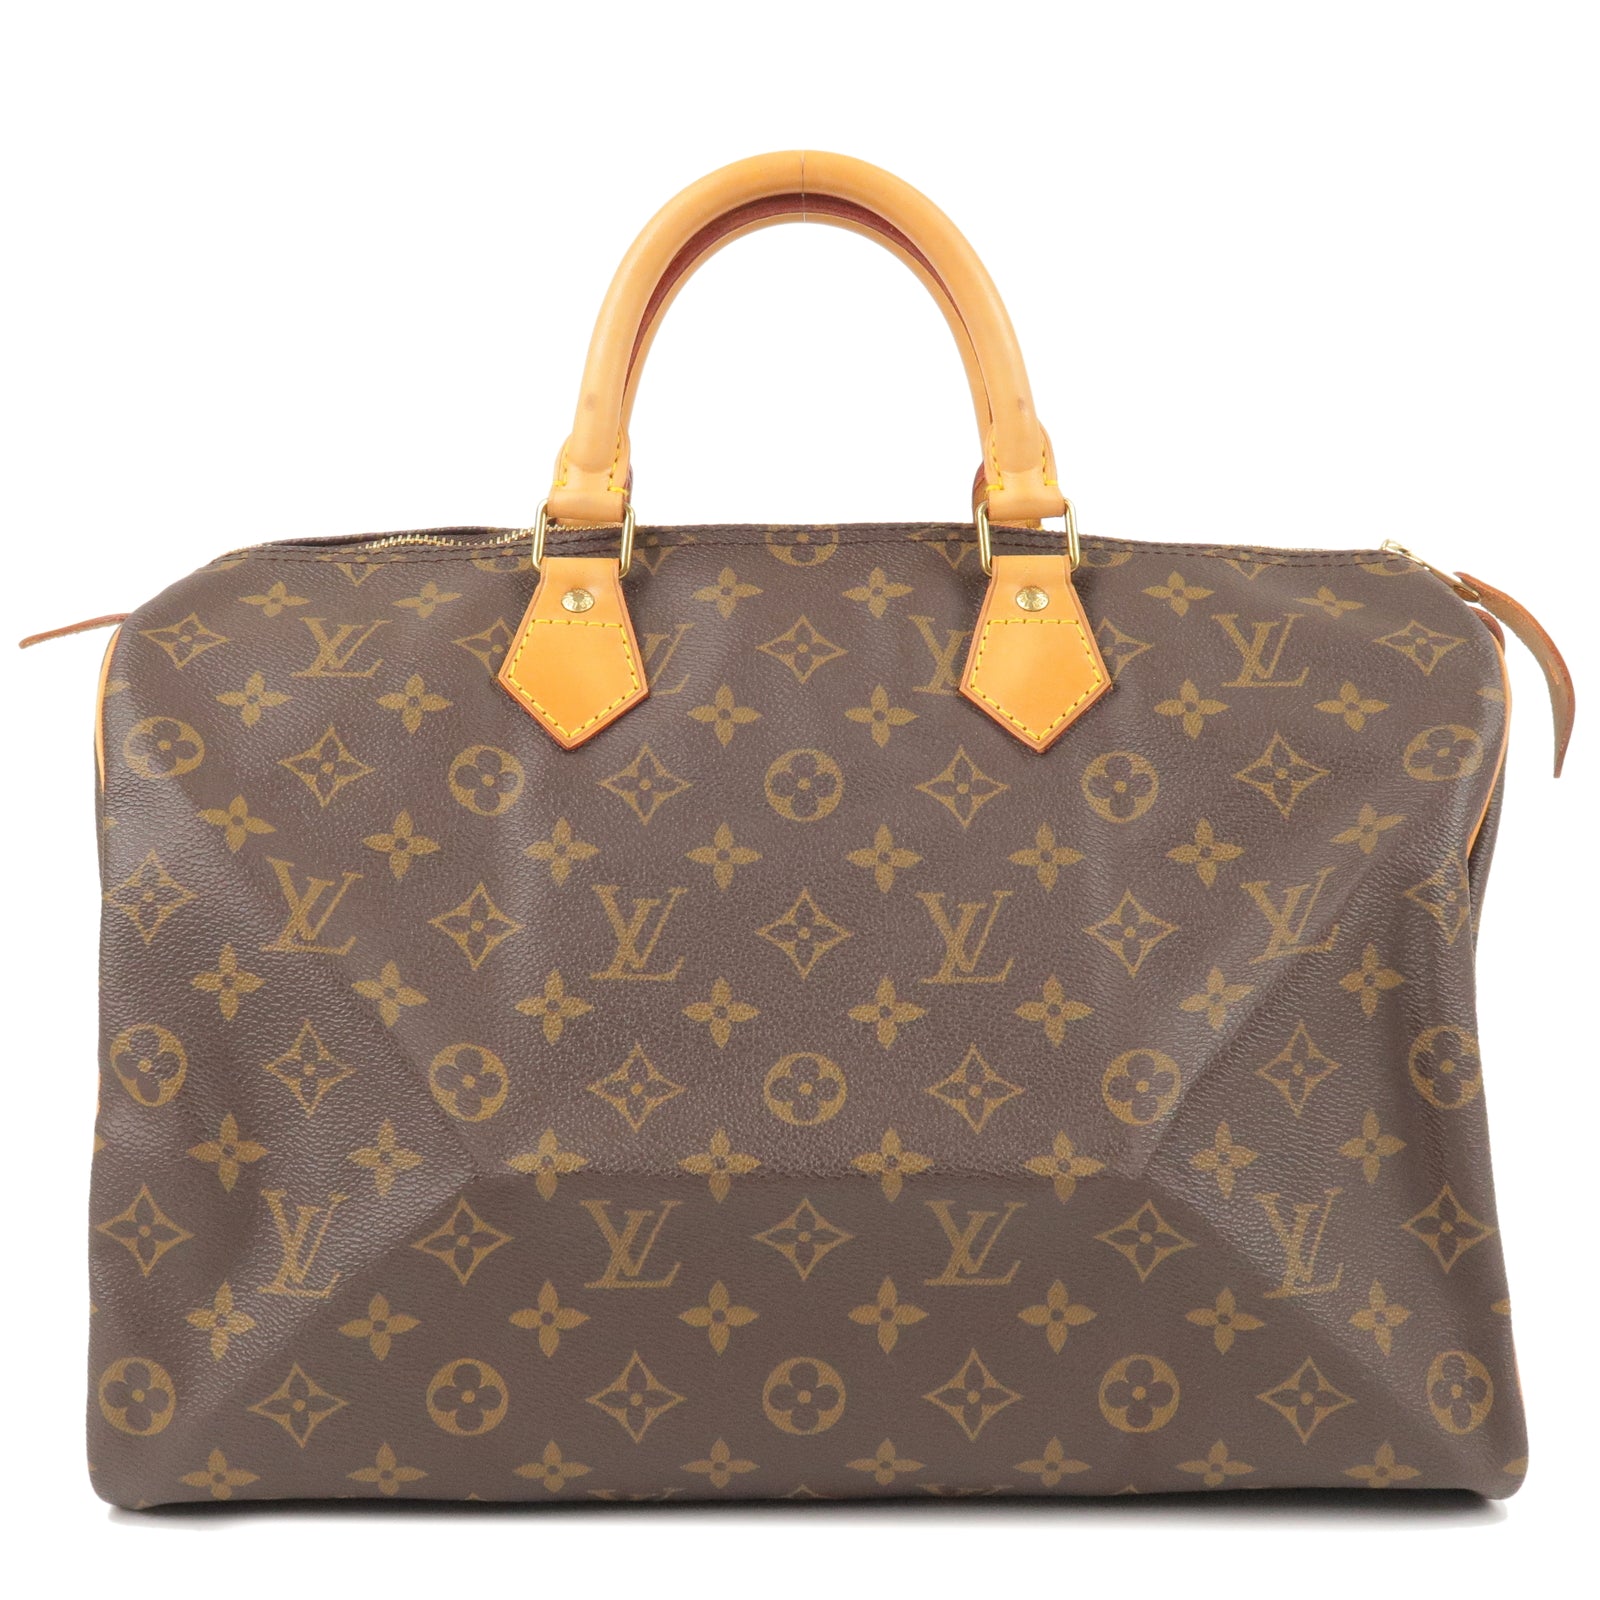 35 - Vuitton - Louis - M41524 – dct - Collection Louis Vuitton Clothing is  empty - Bag - Monogram - Bag - ep_vintage luxury Store - Speedy - Hand -  Boston